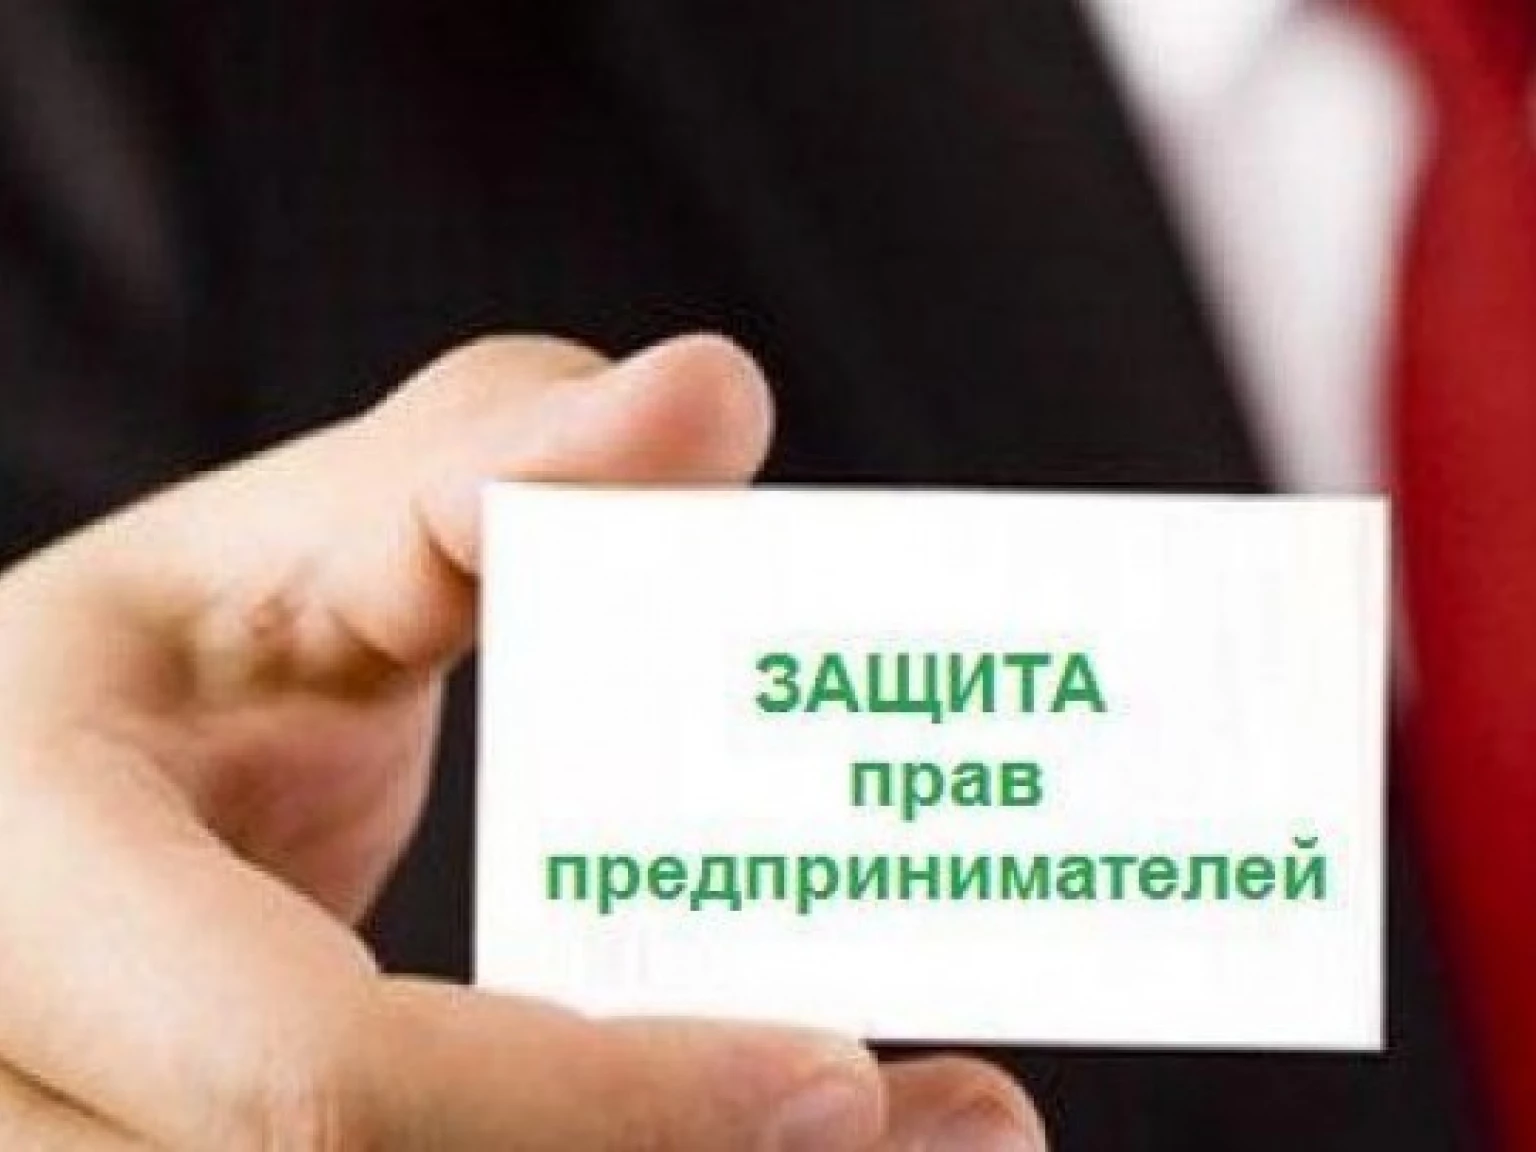 Защита прав предпринимателей москвы. Защита прав предпринимателей. Картинки уполномоченный по правам предпринимателей. Фото защита предпринимателей. Защита прав предпринимательства.